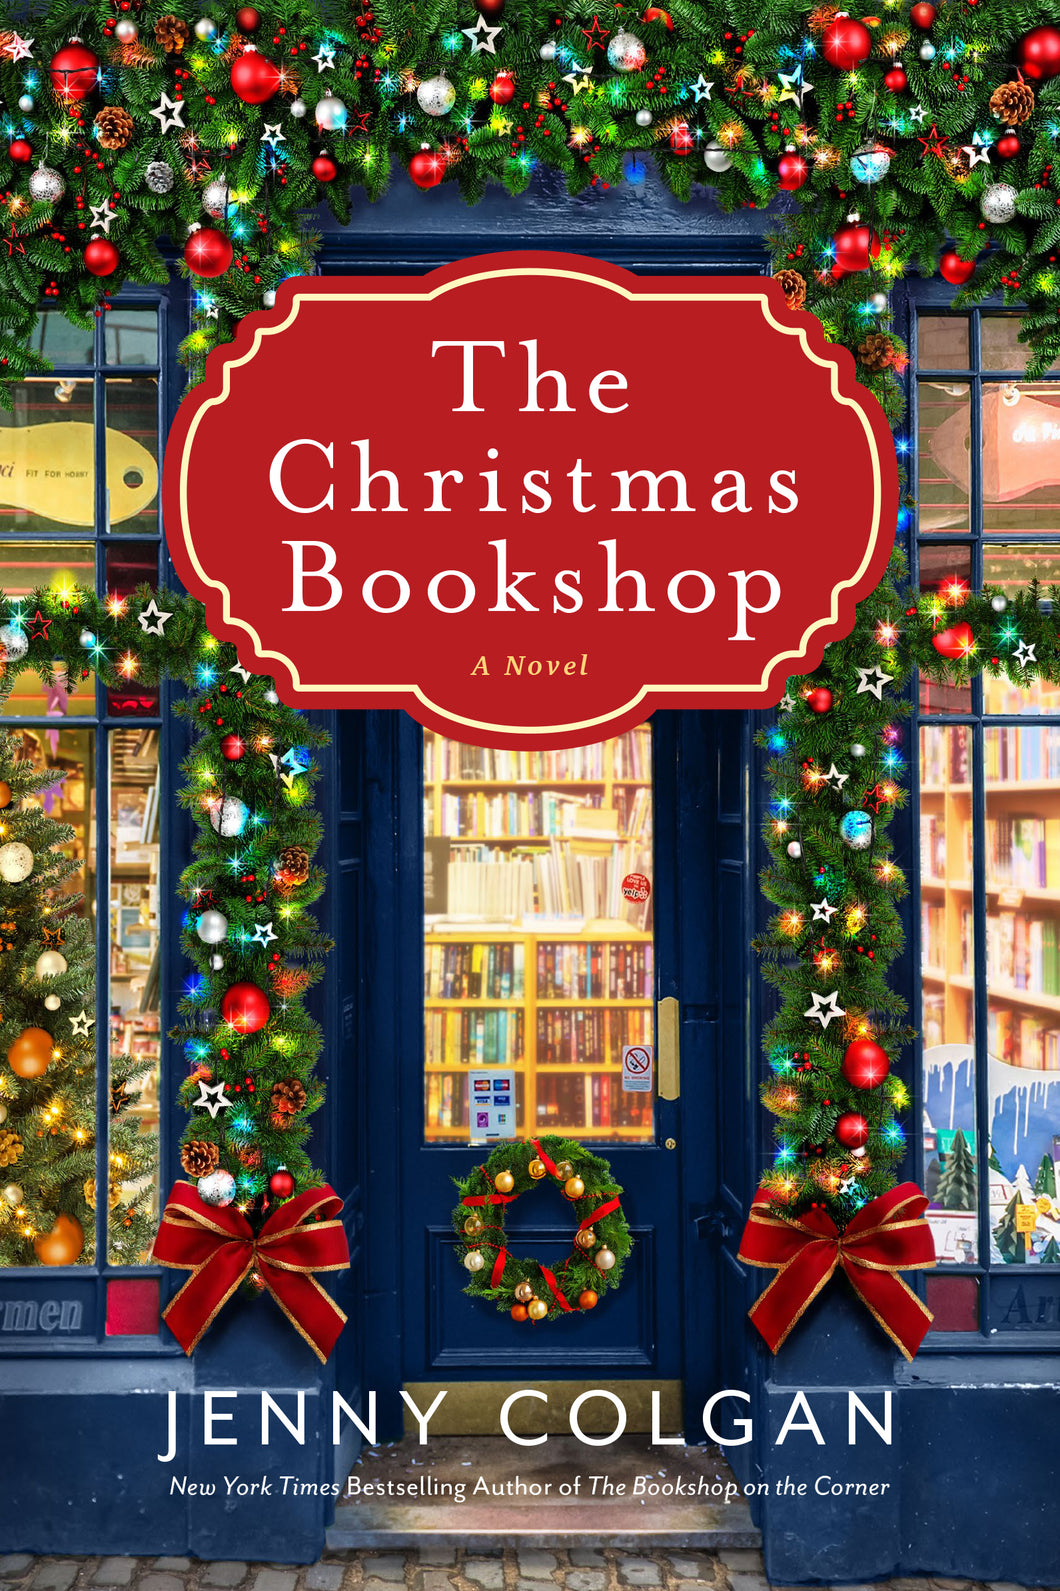 Christmas Bookshop, The by Jenny Colgan (PB)